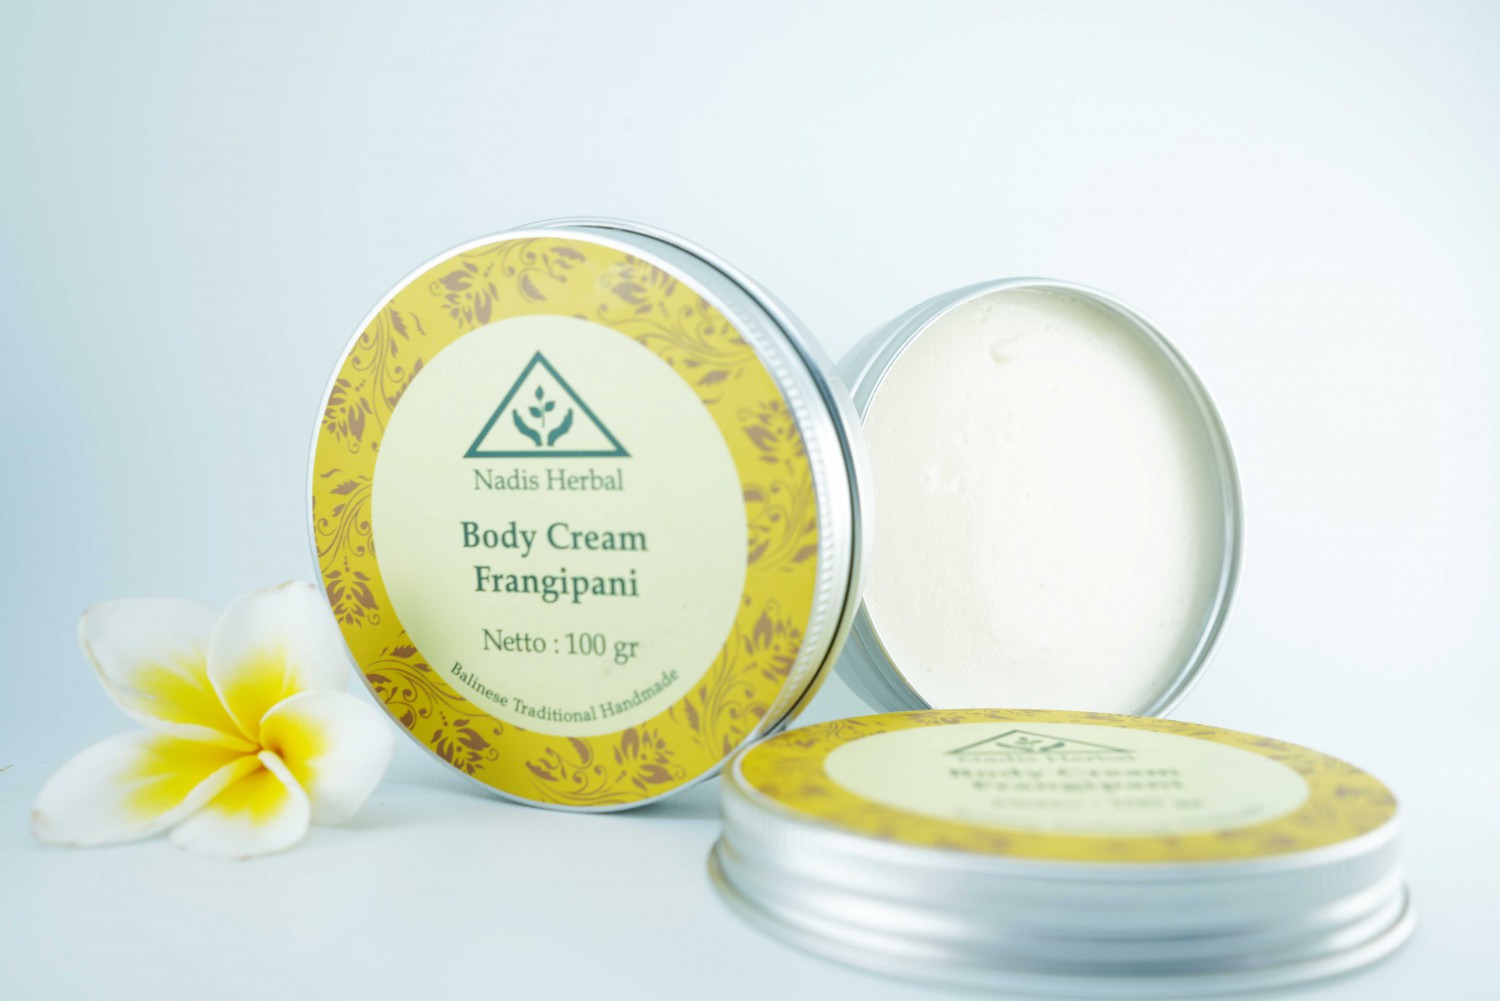 Body cream frangipani